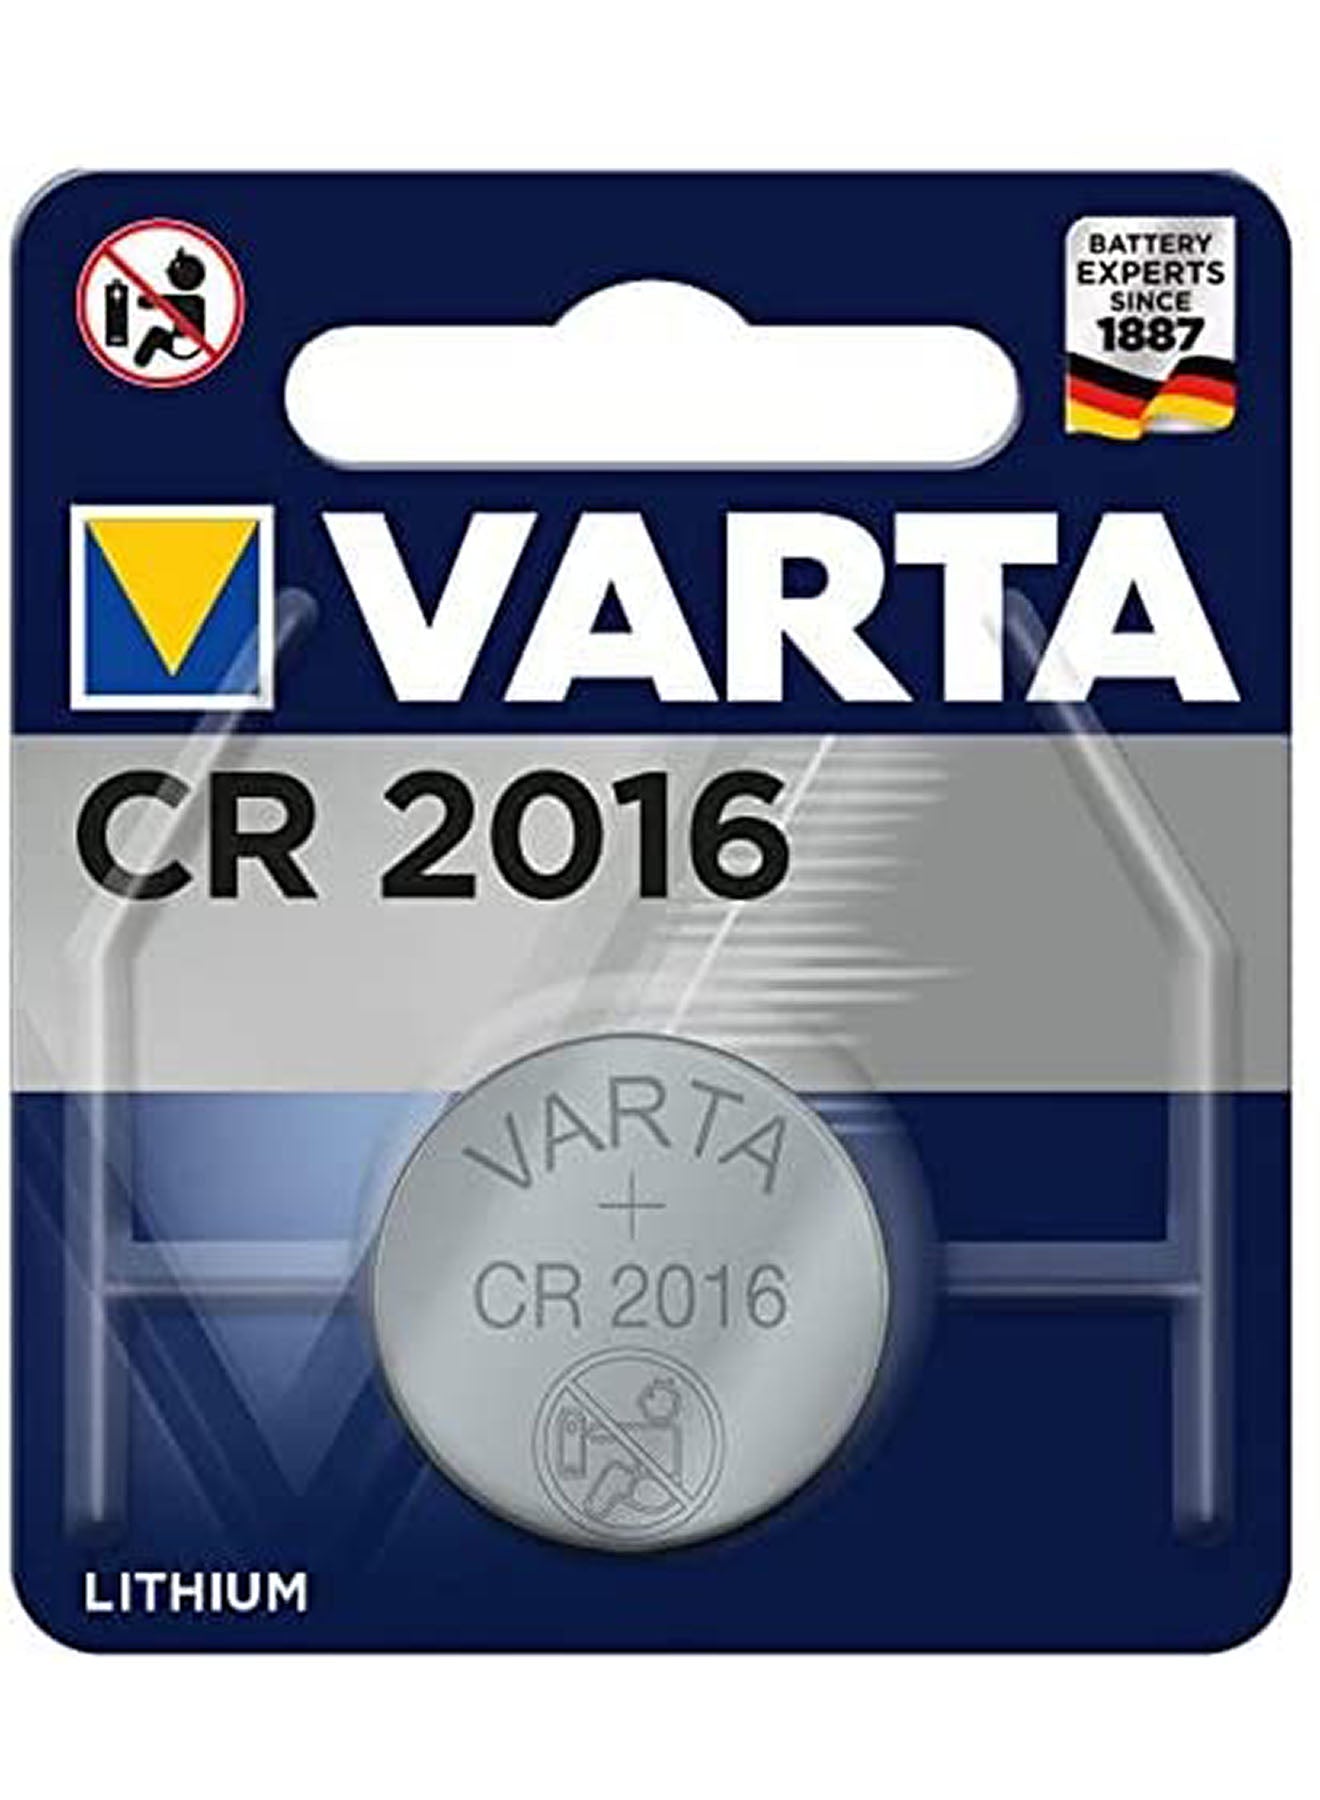 Varta Lithium CR 2016 Battery Button Cel 3 Volt Value Pack of 2 